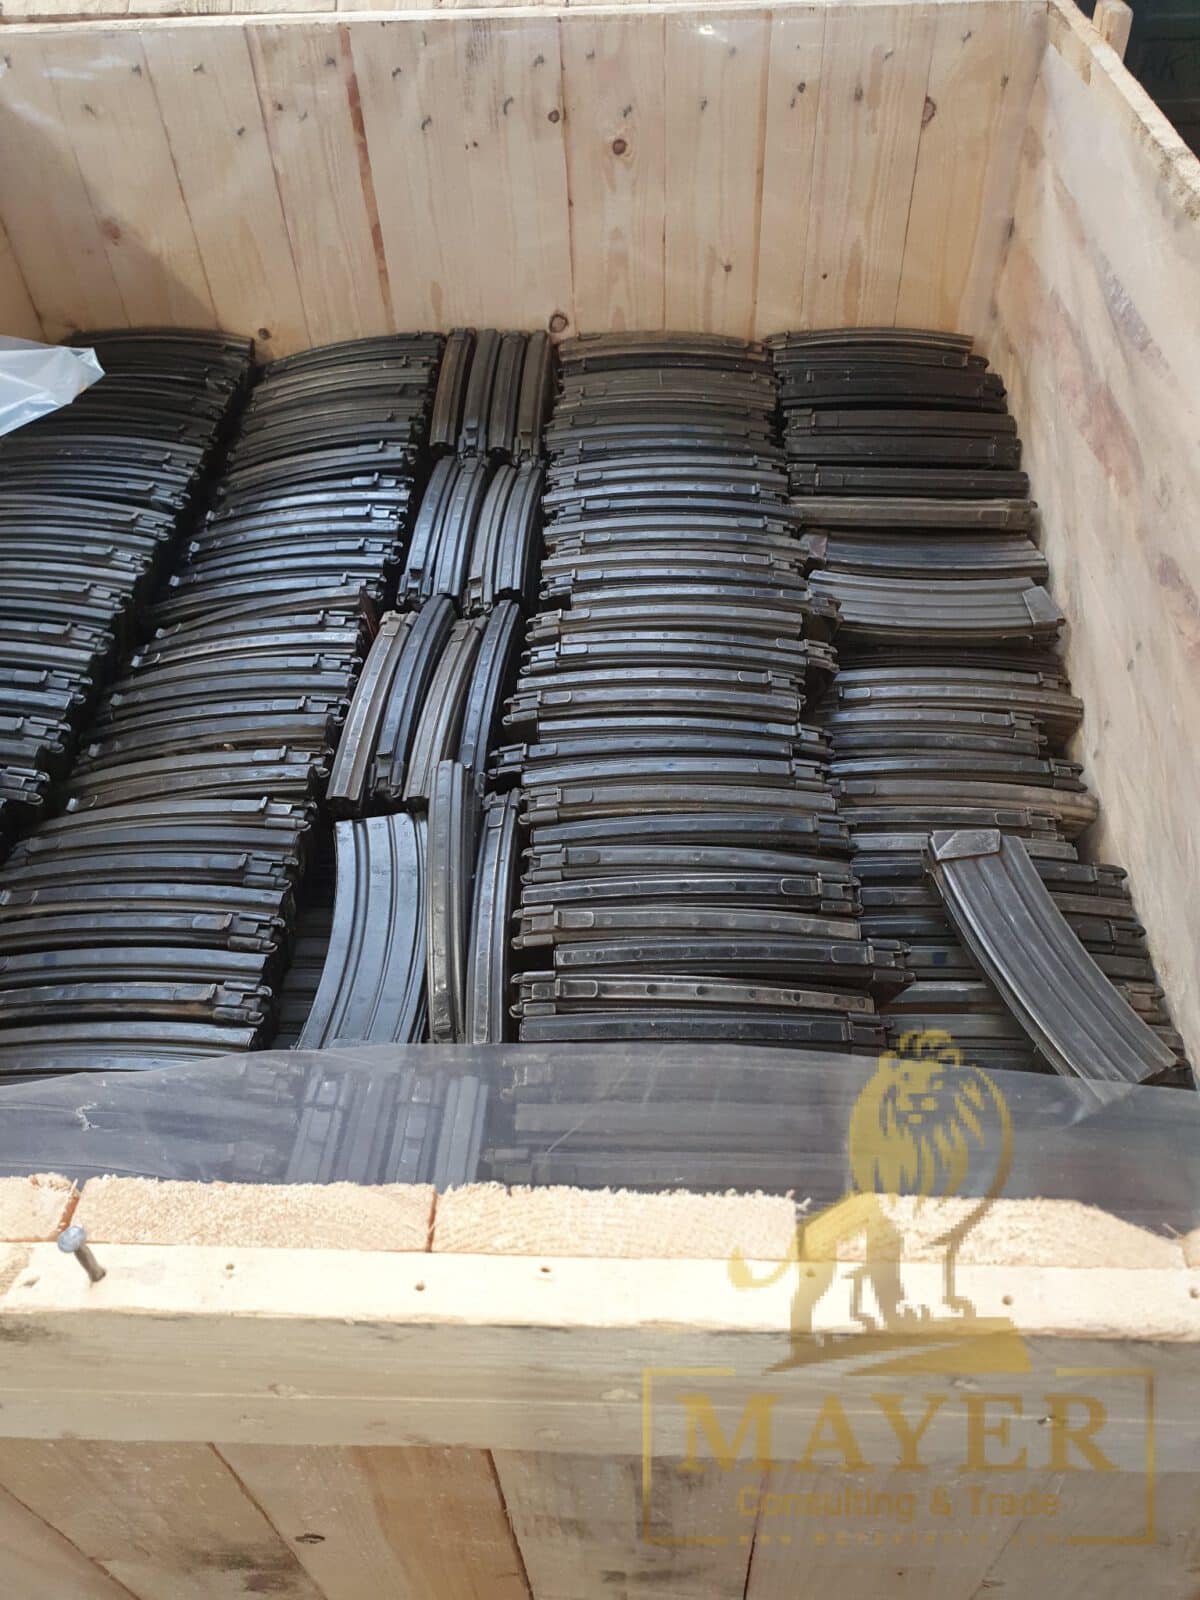 Israeli military surplus Galil magazines in crate